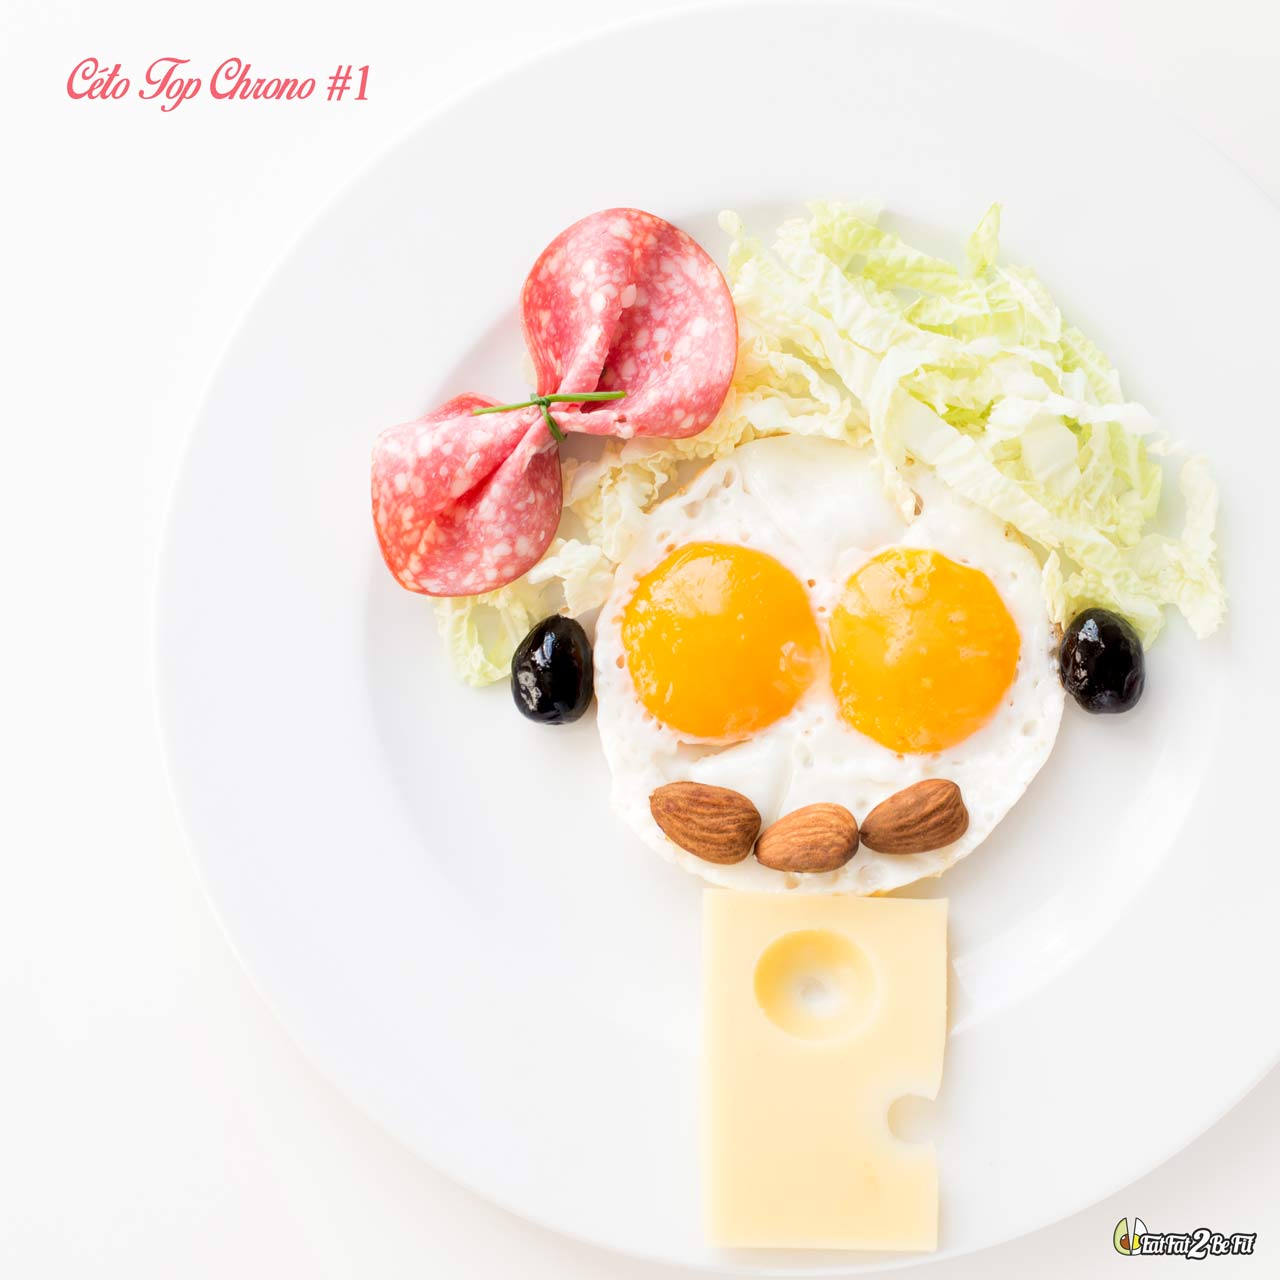 #01 œuf - chou chinois - olive noire - salami - amande - emmental